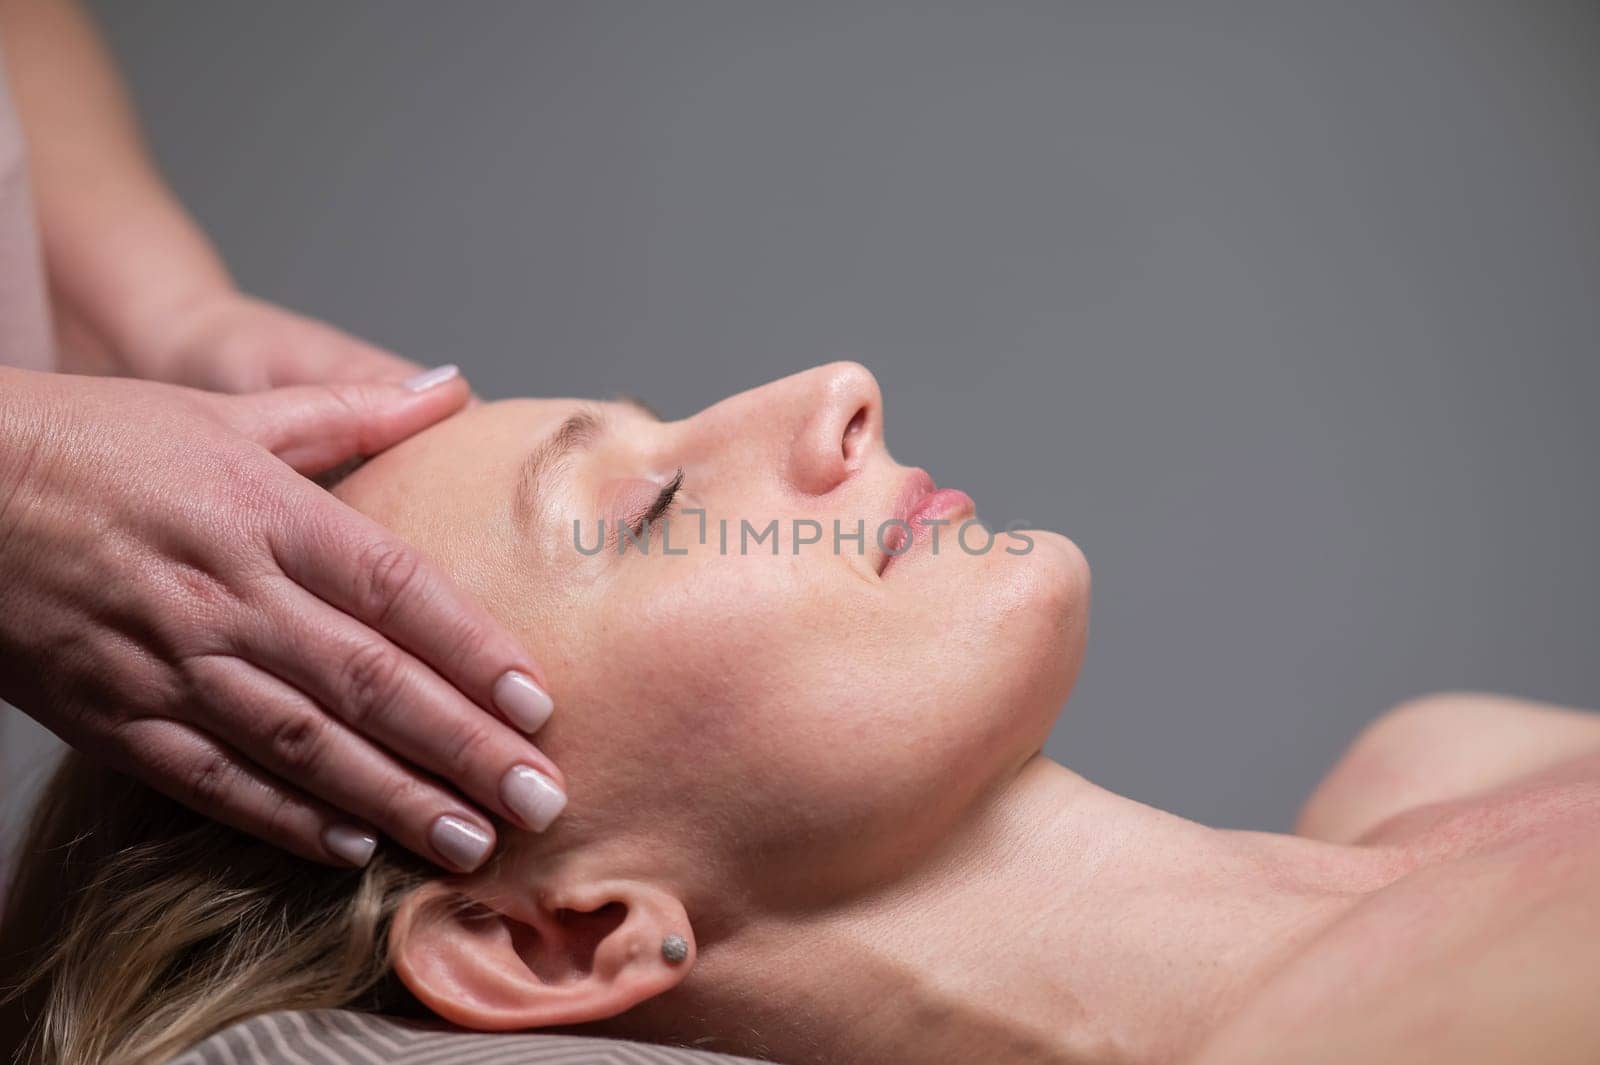 Caucasian woman undergoing head and face massage procedure